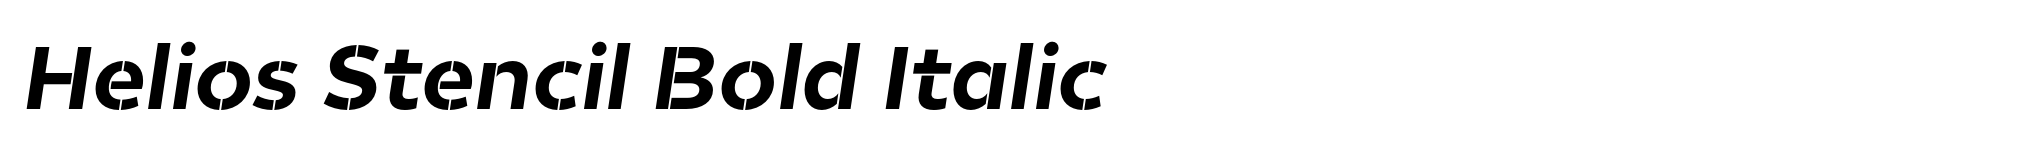 Helios Stencil Bold Italic image